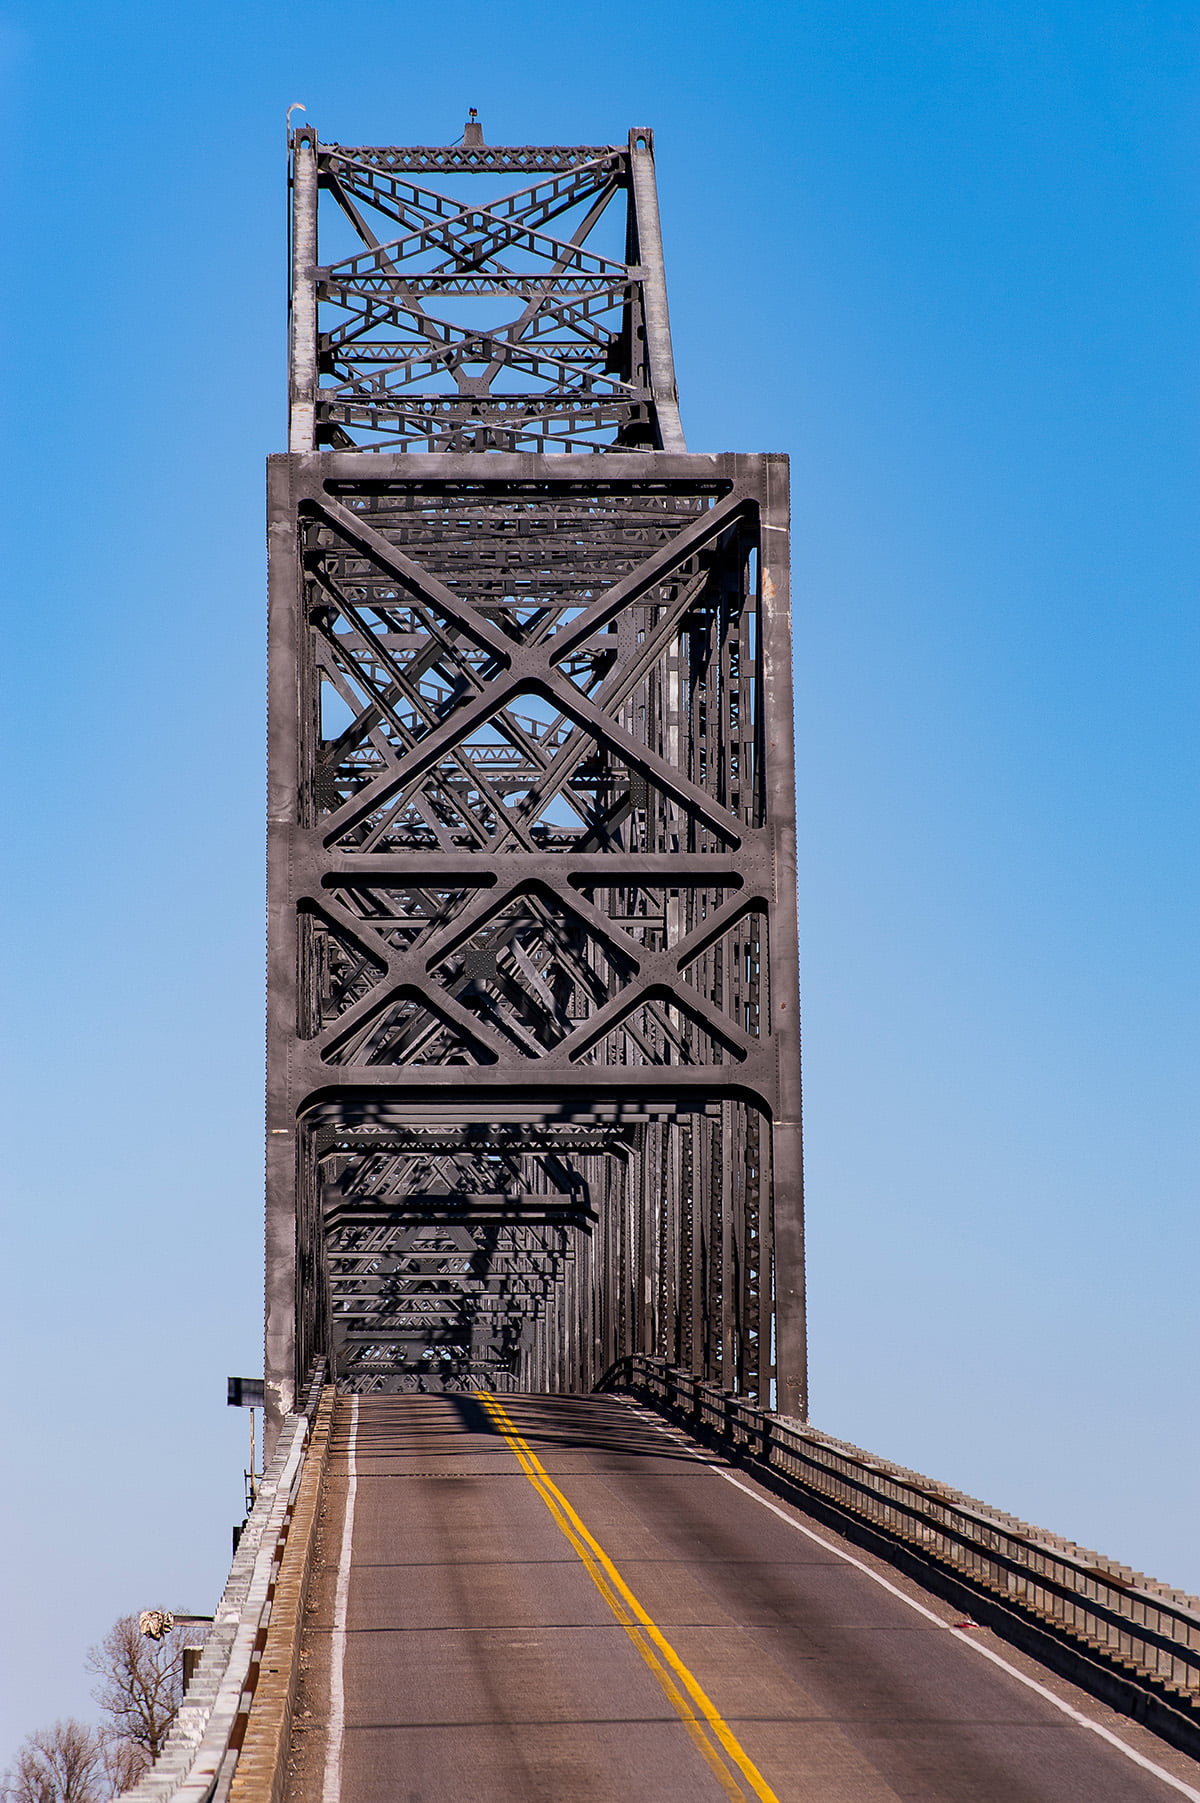 Ohio River “Cairo” Bridge to Shut Down